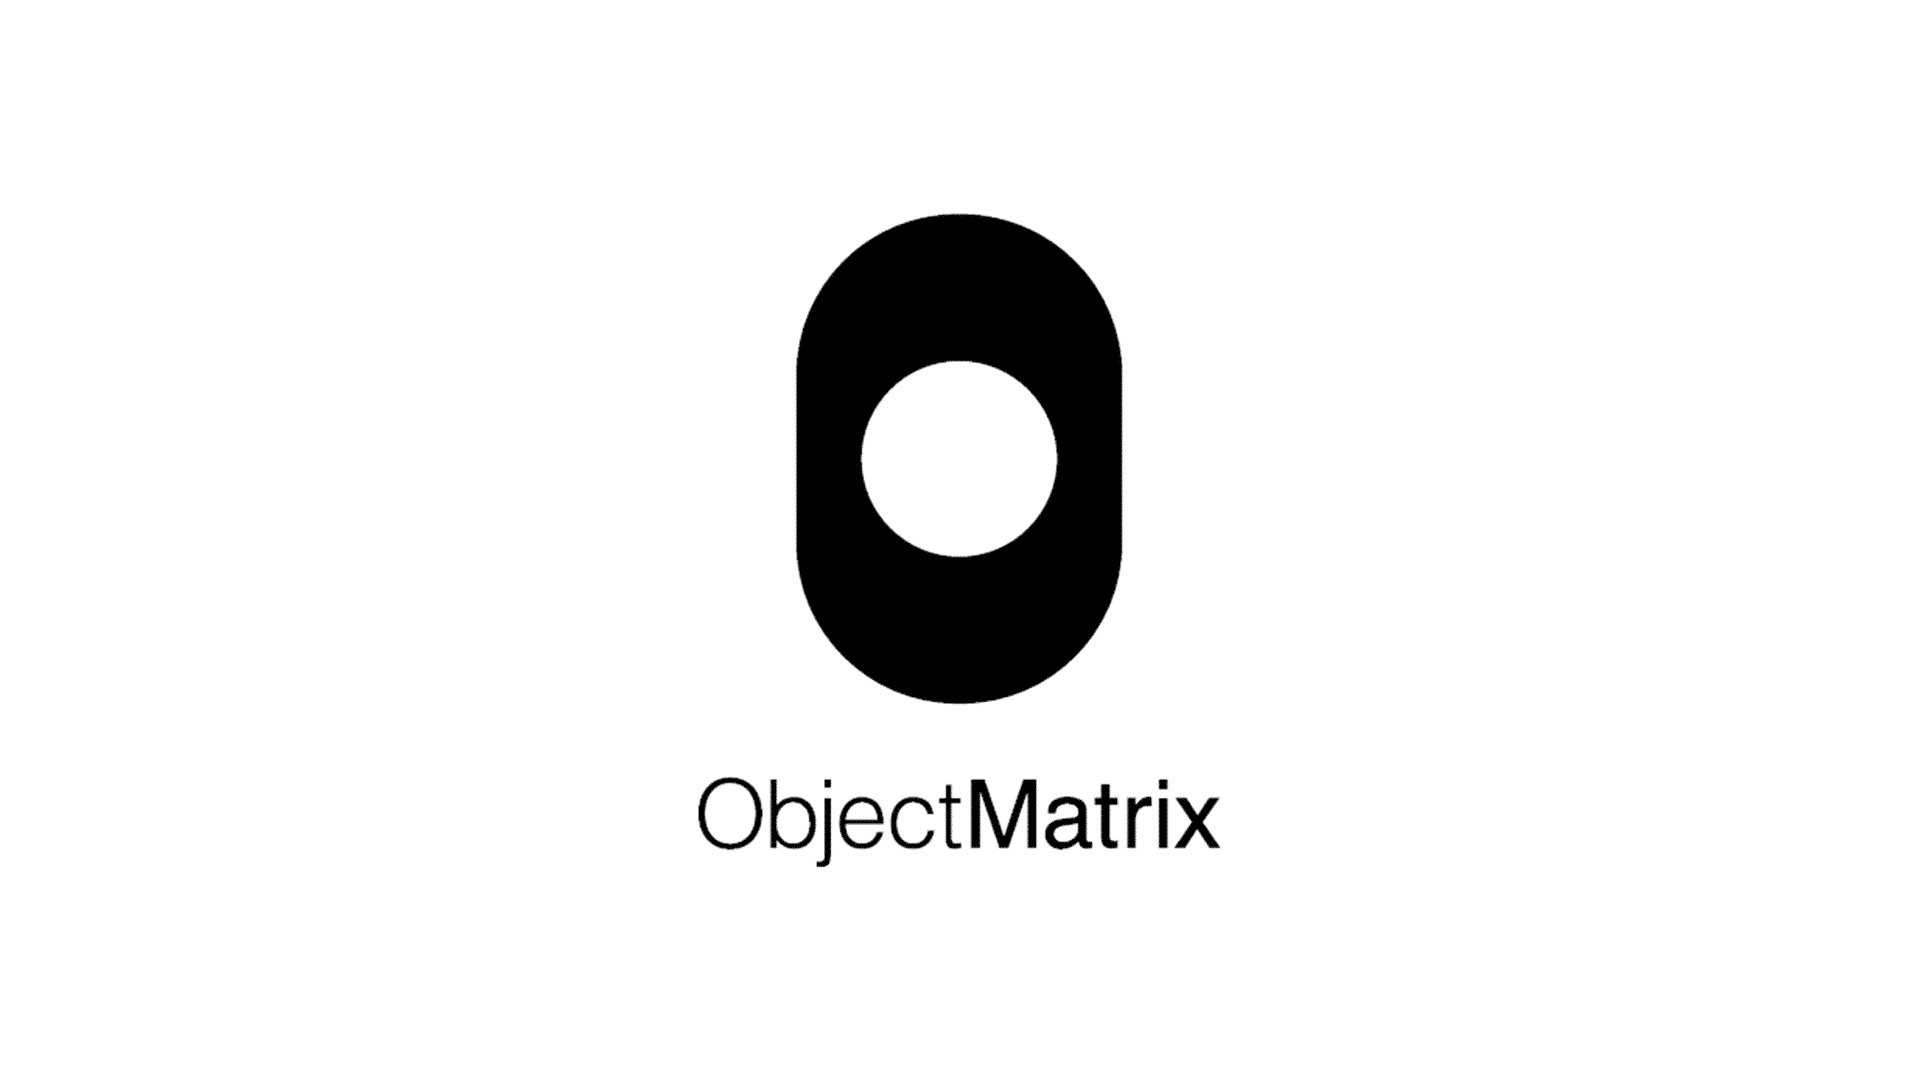 ObjectMatrix